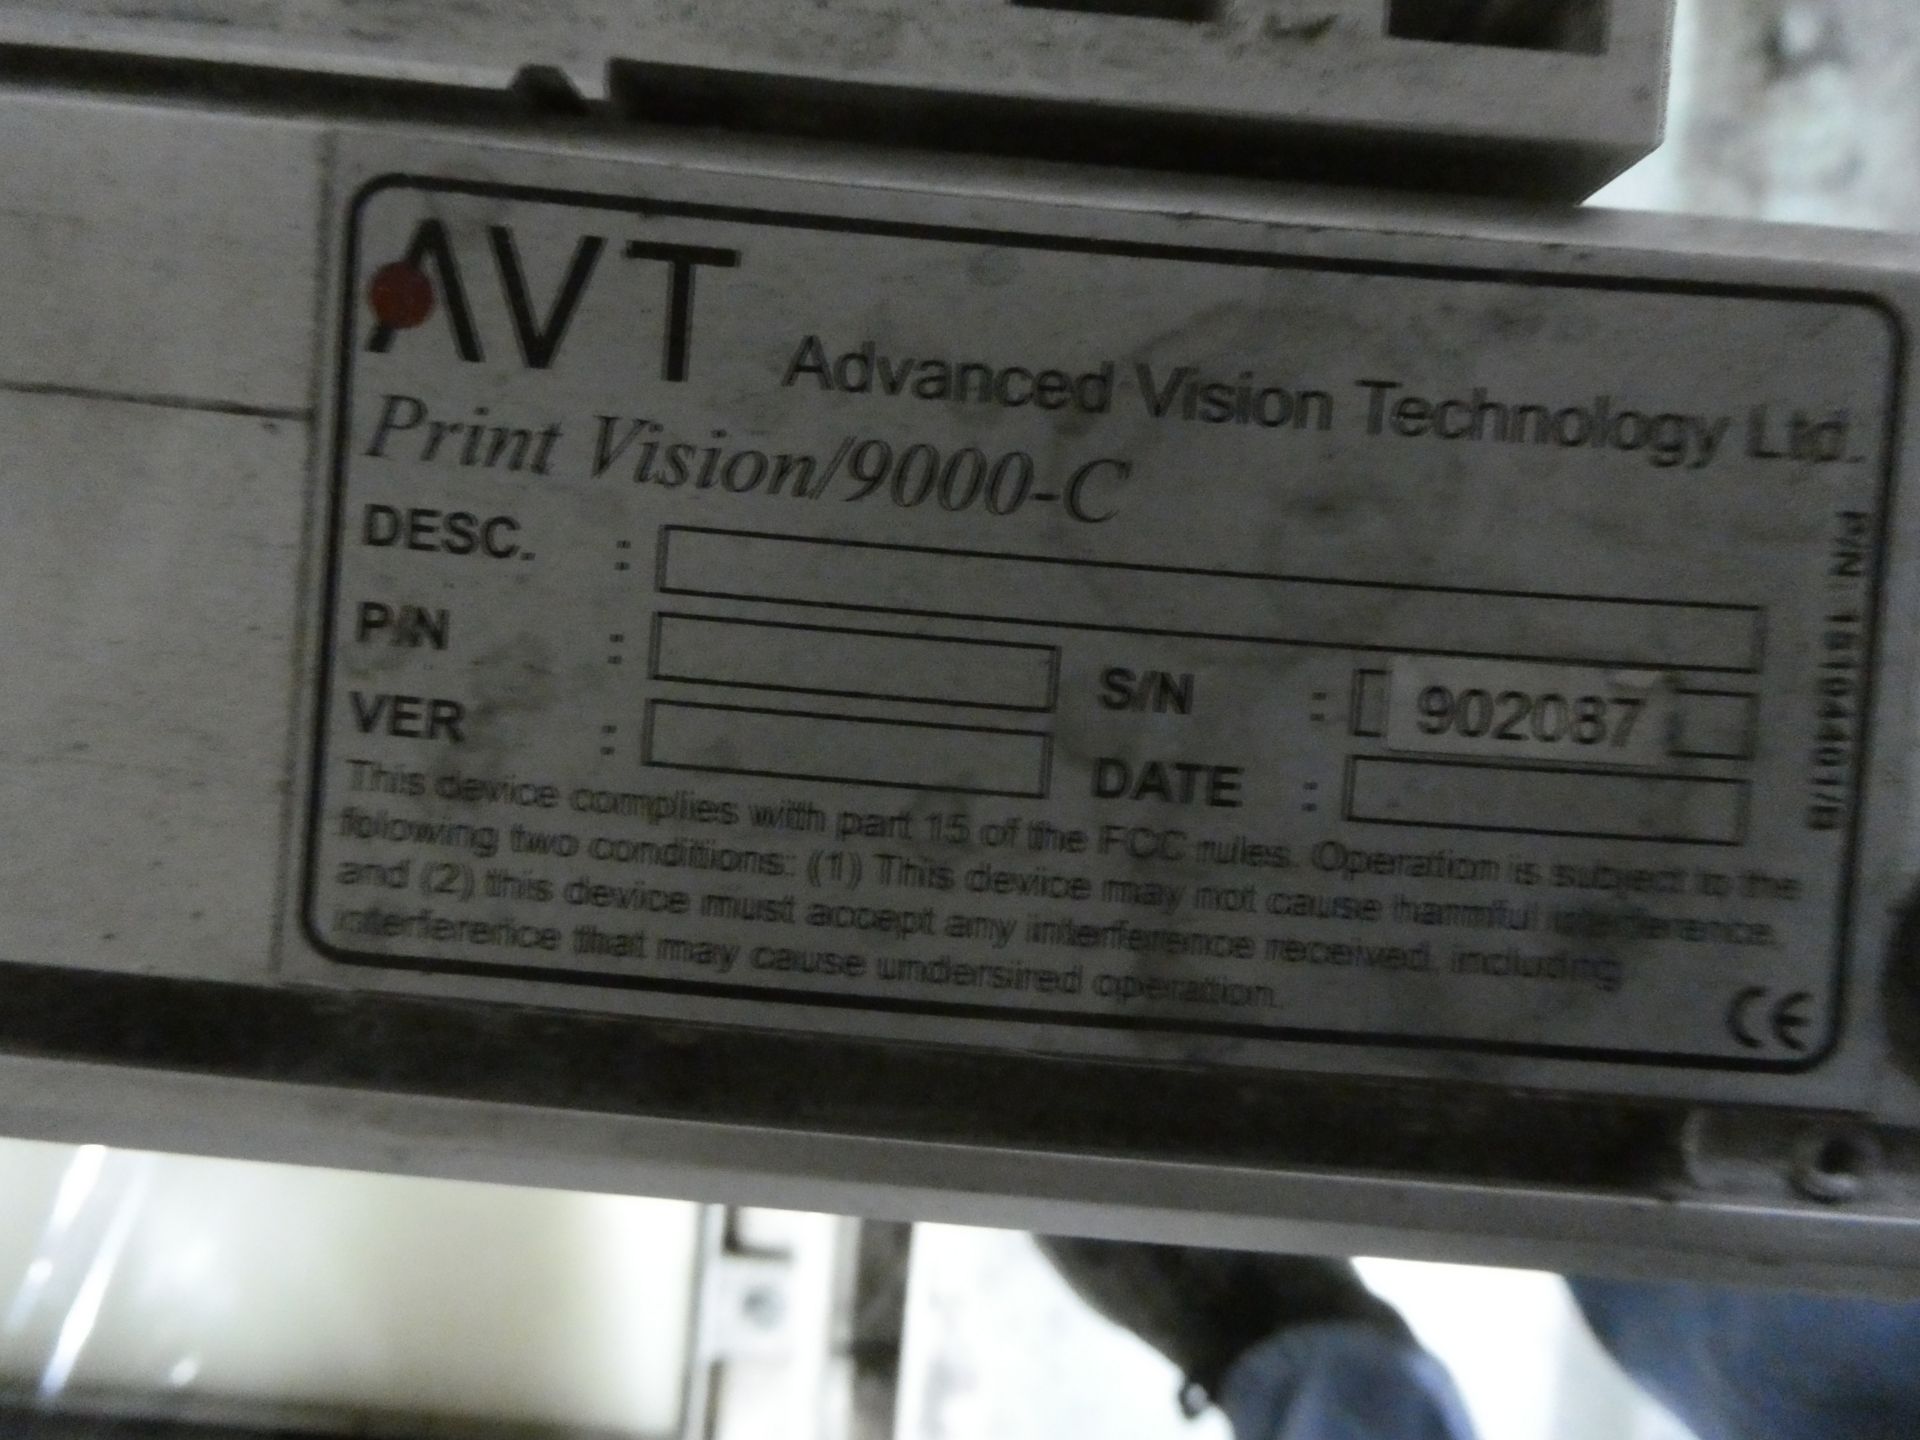 86" AVT PrintVision 9000-C Video Inspection System - Image 6 of 8